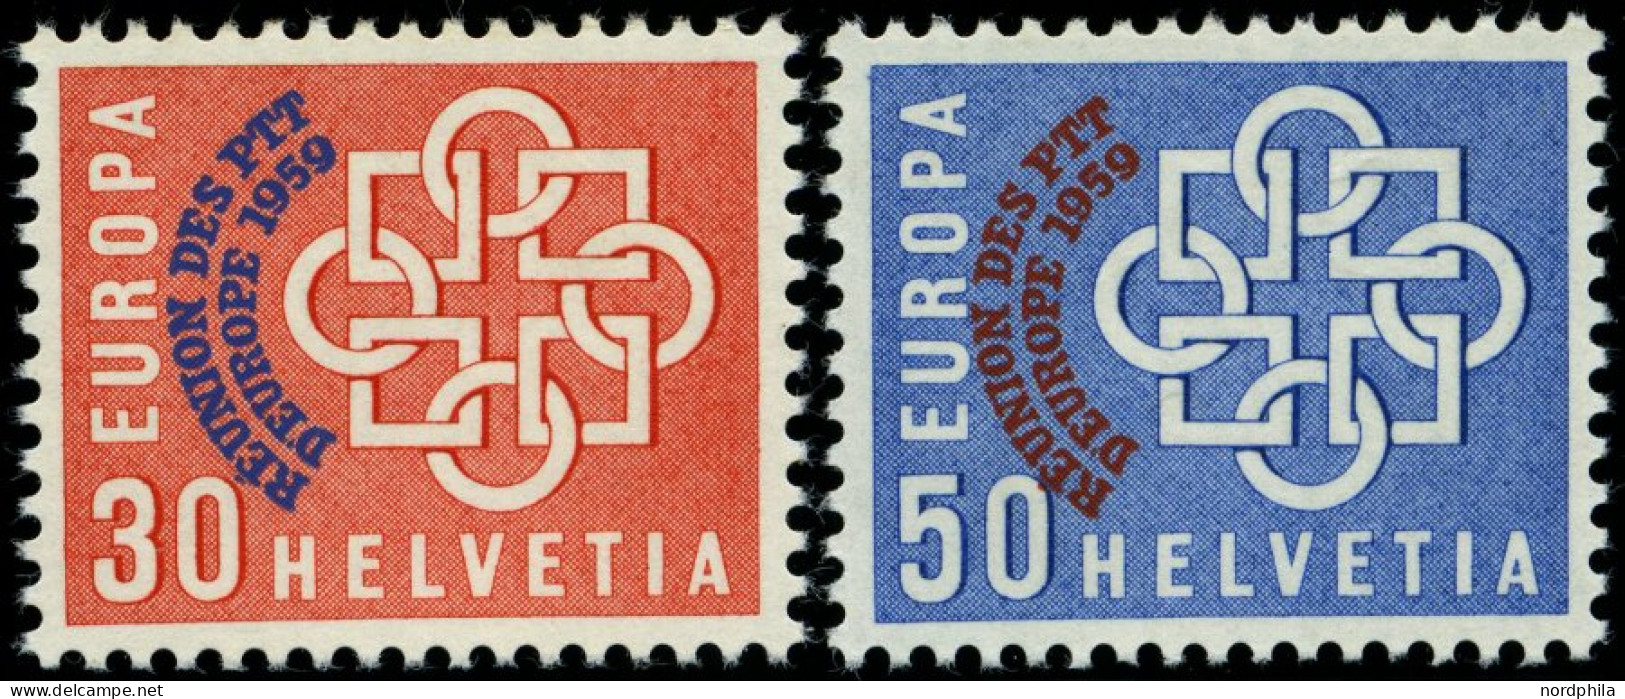 SCHWEIZ BUNDESPOST 681/2 **, 1959, PTT, Prachtsatz, Mi. 40.- - Unused Stamps